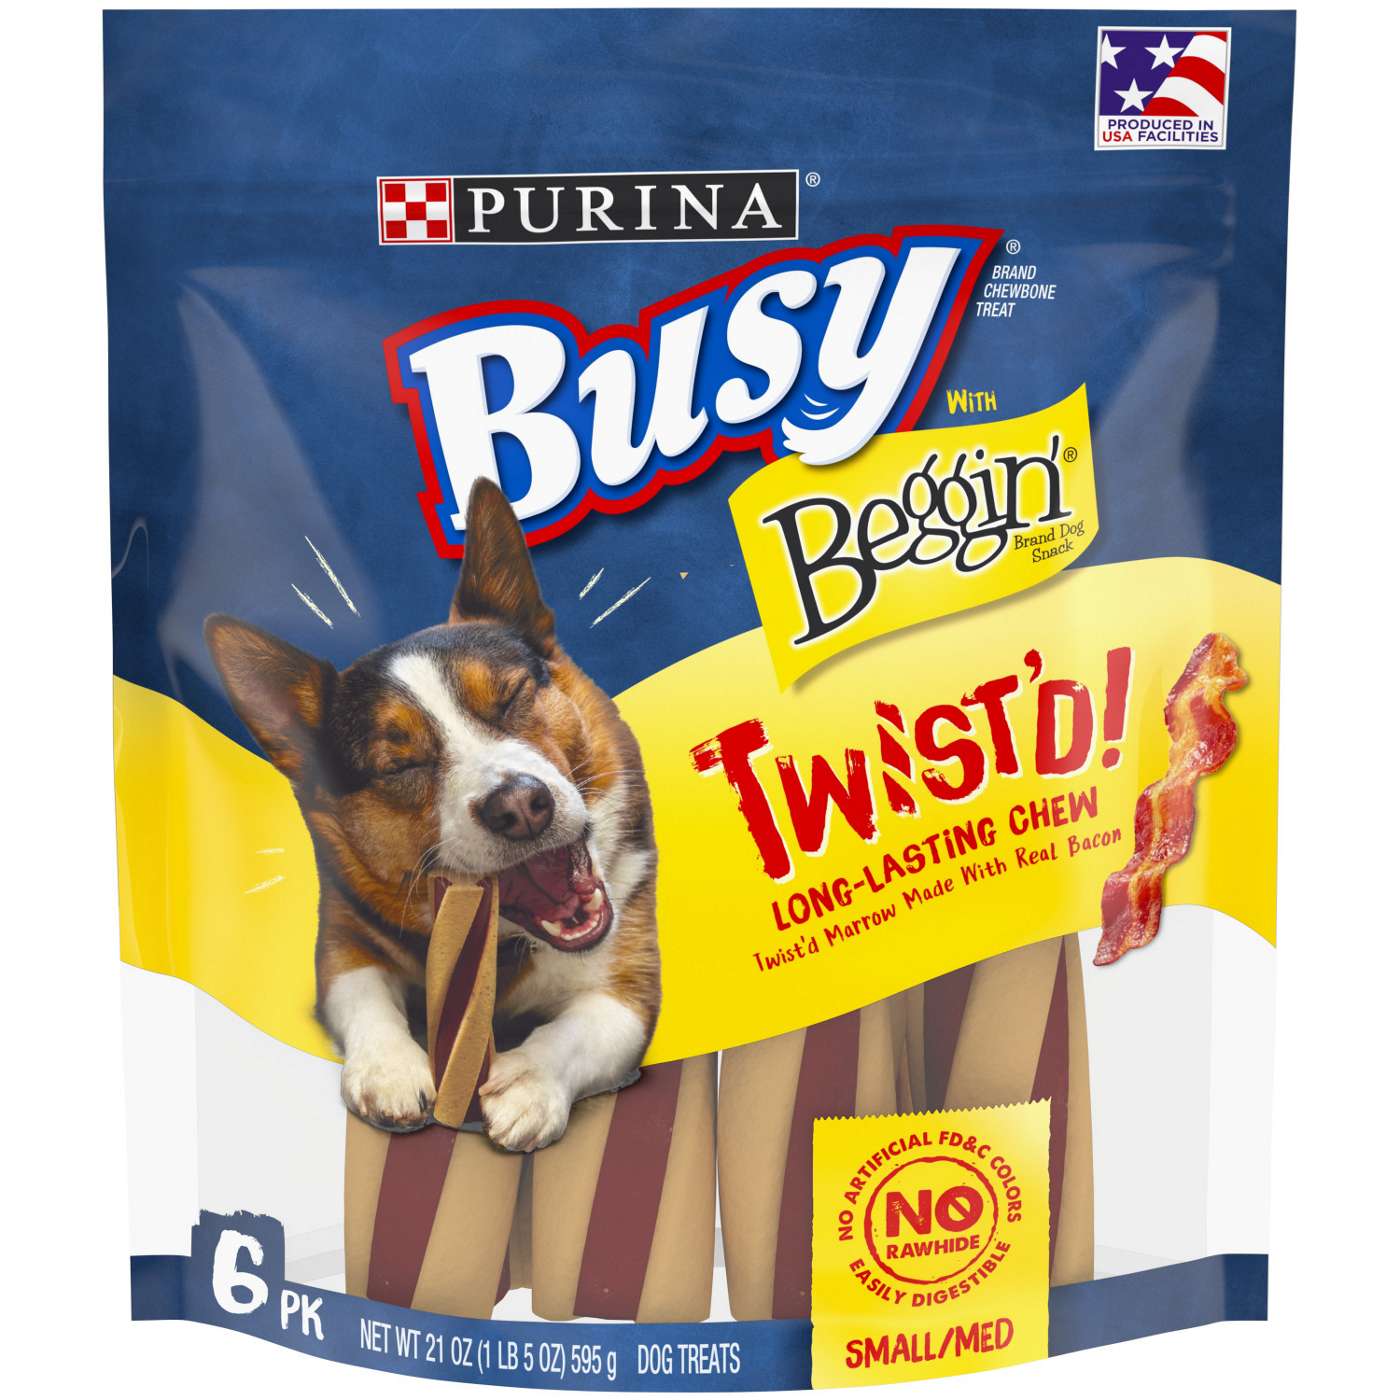 Busy Beggin' Twist'd Small & Medium Dog Treats; image 1 of 8